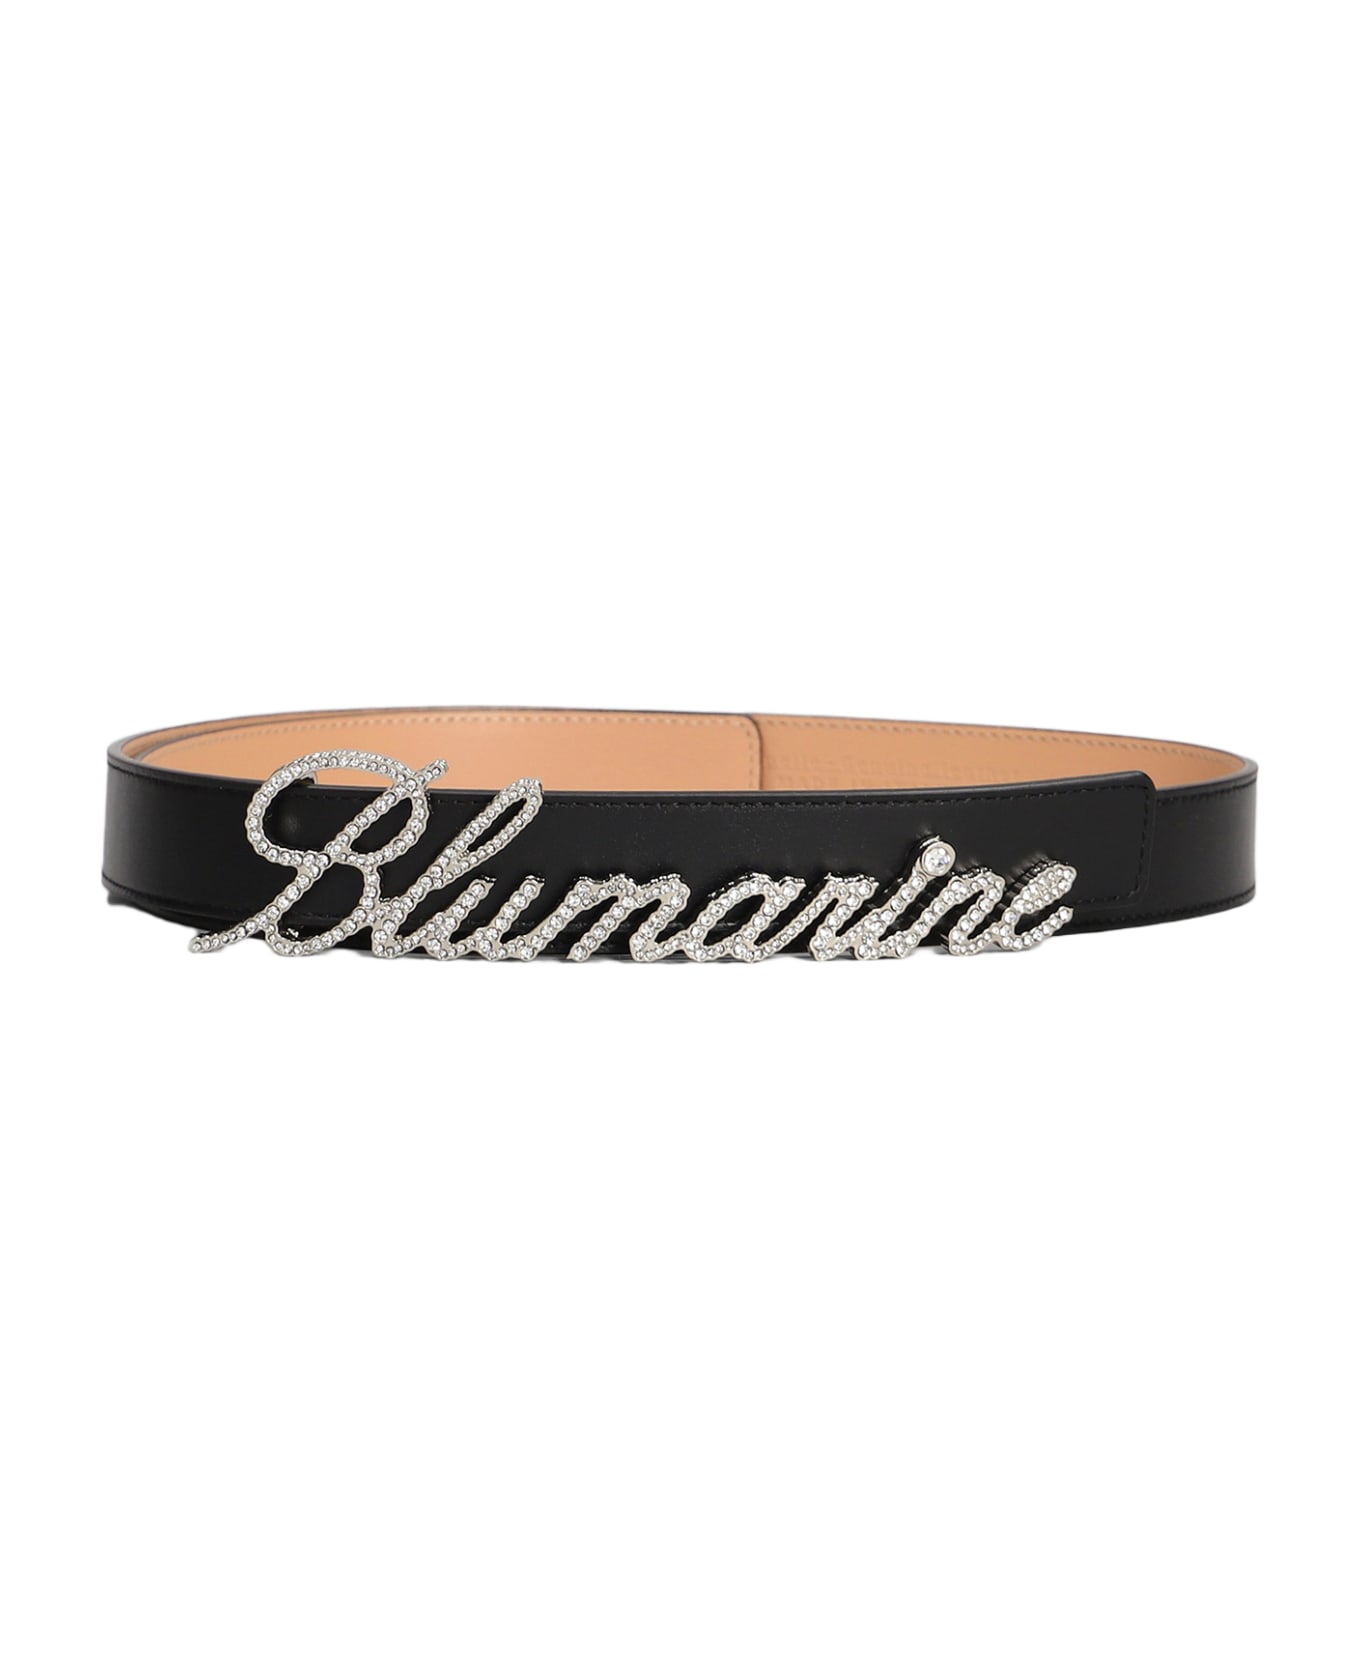 Blumarine Belts In Black Leather - black